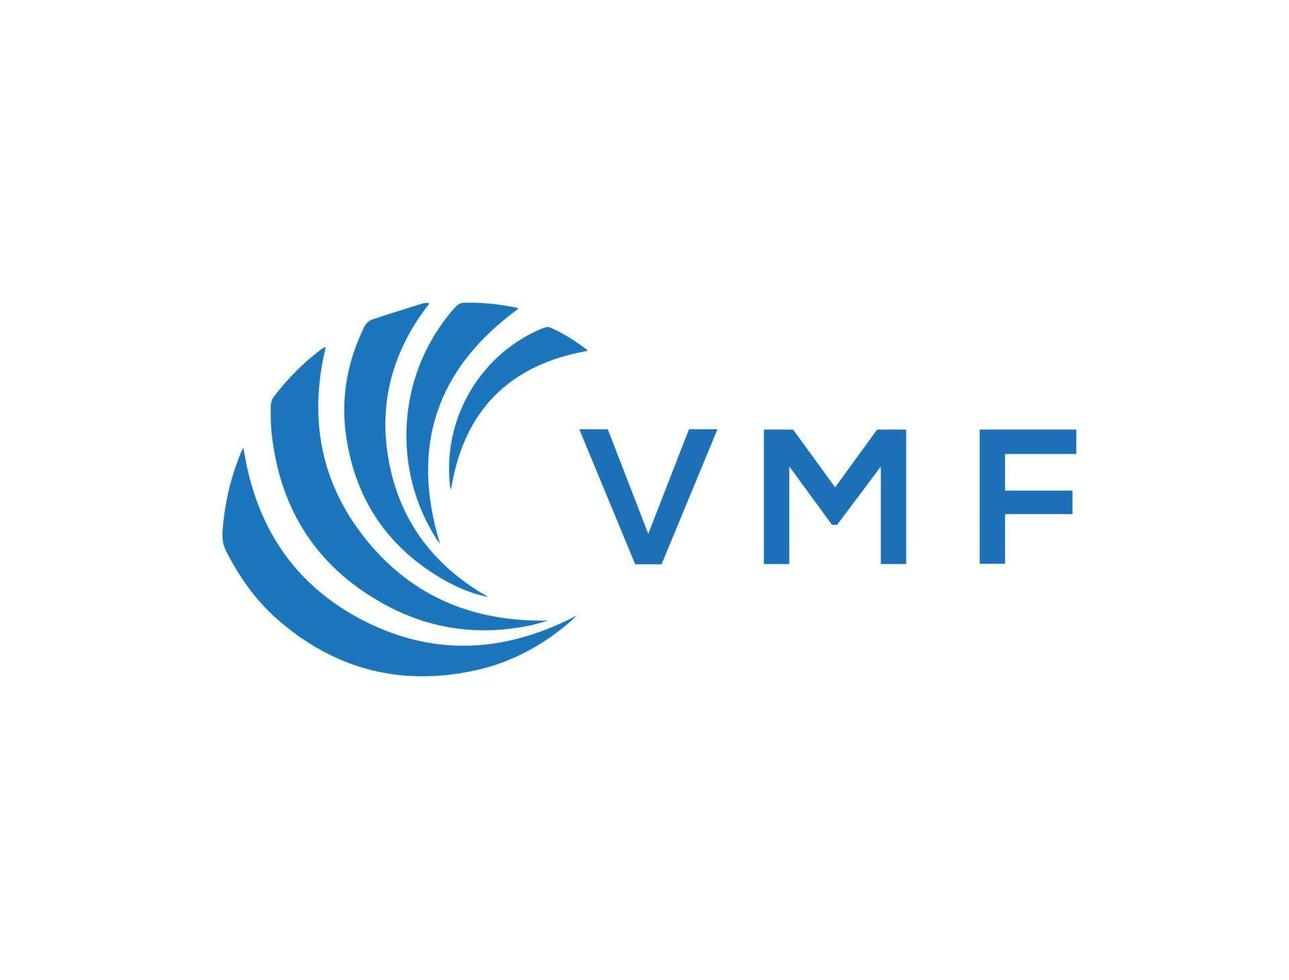 vmf letra logo diseño en blanco antecedentes. vmf creativo circulo letra logo concepto. vmf letra diseño. vector